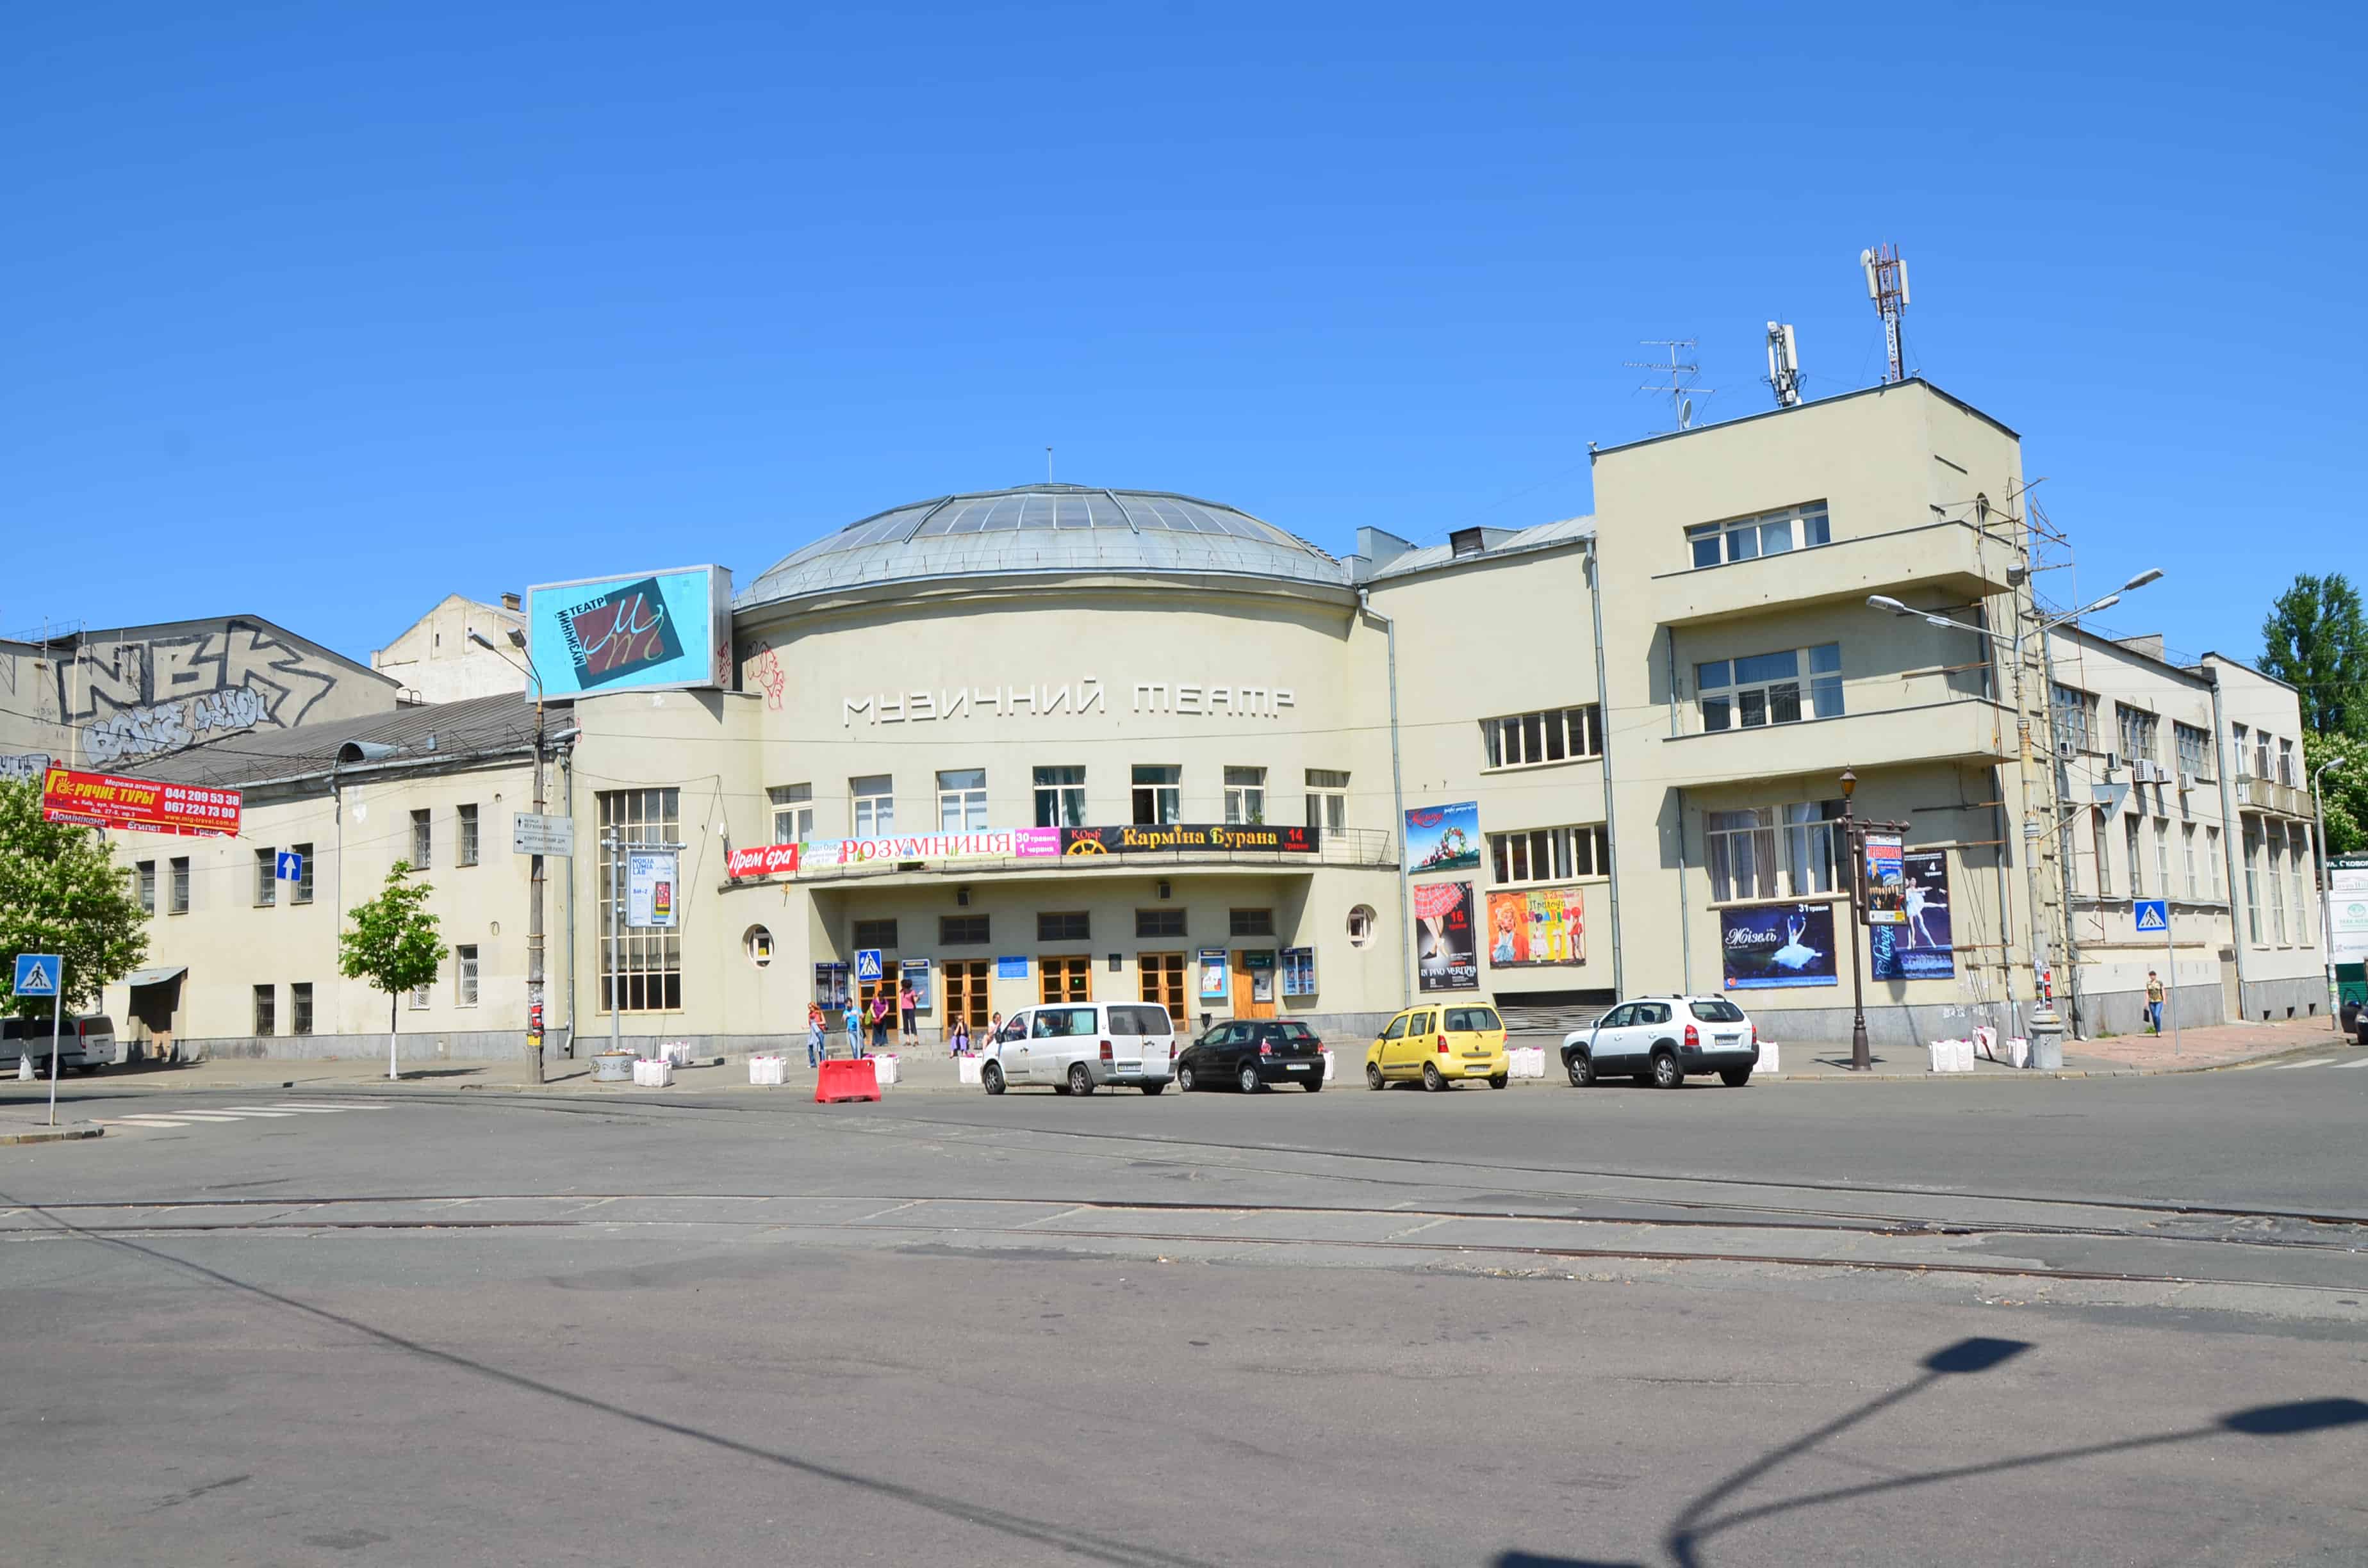 Kiev Municipal Academic Opera and Ballet Theater for Children and Youth on Kontraktova Square in Podil, Kyiv, Ukraine